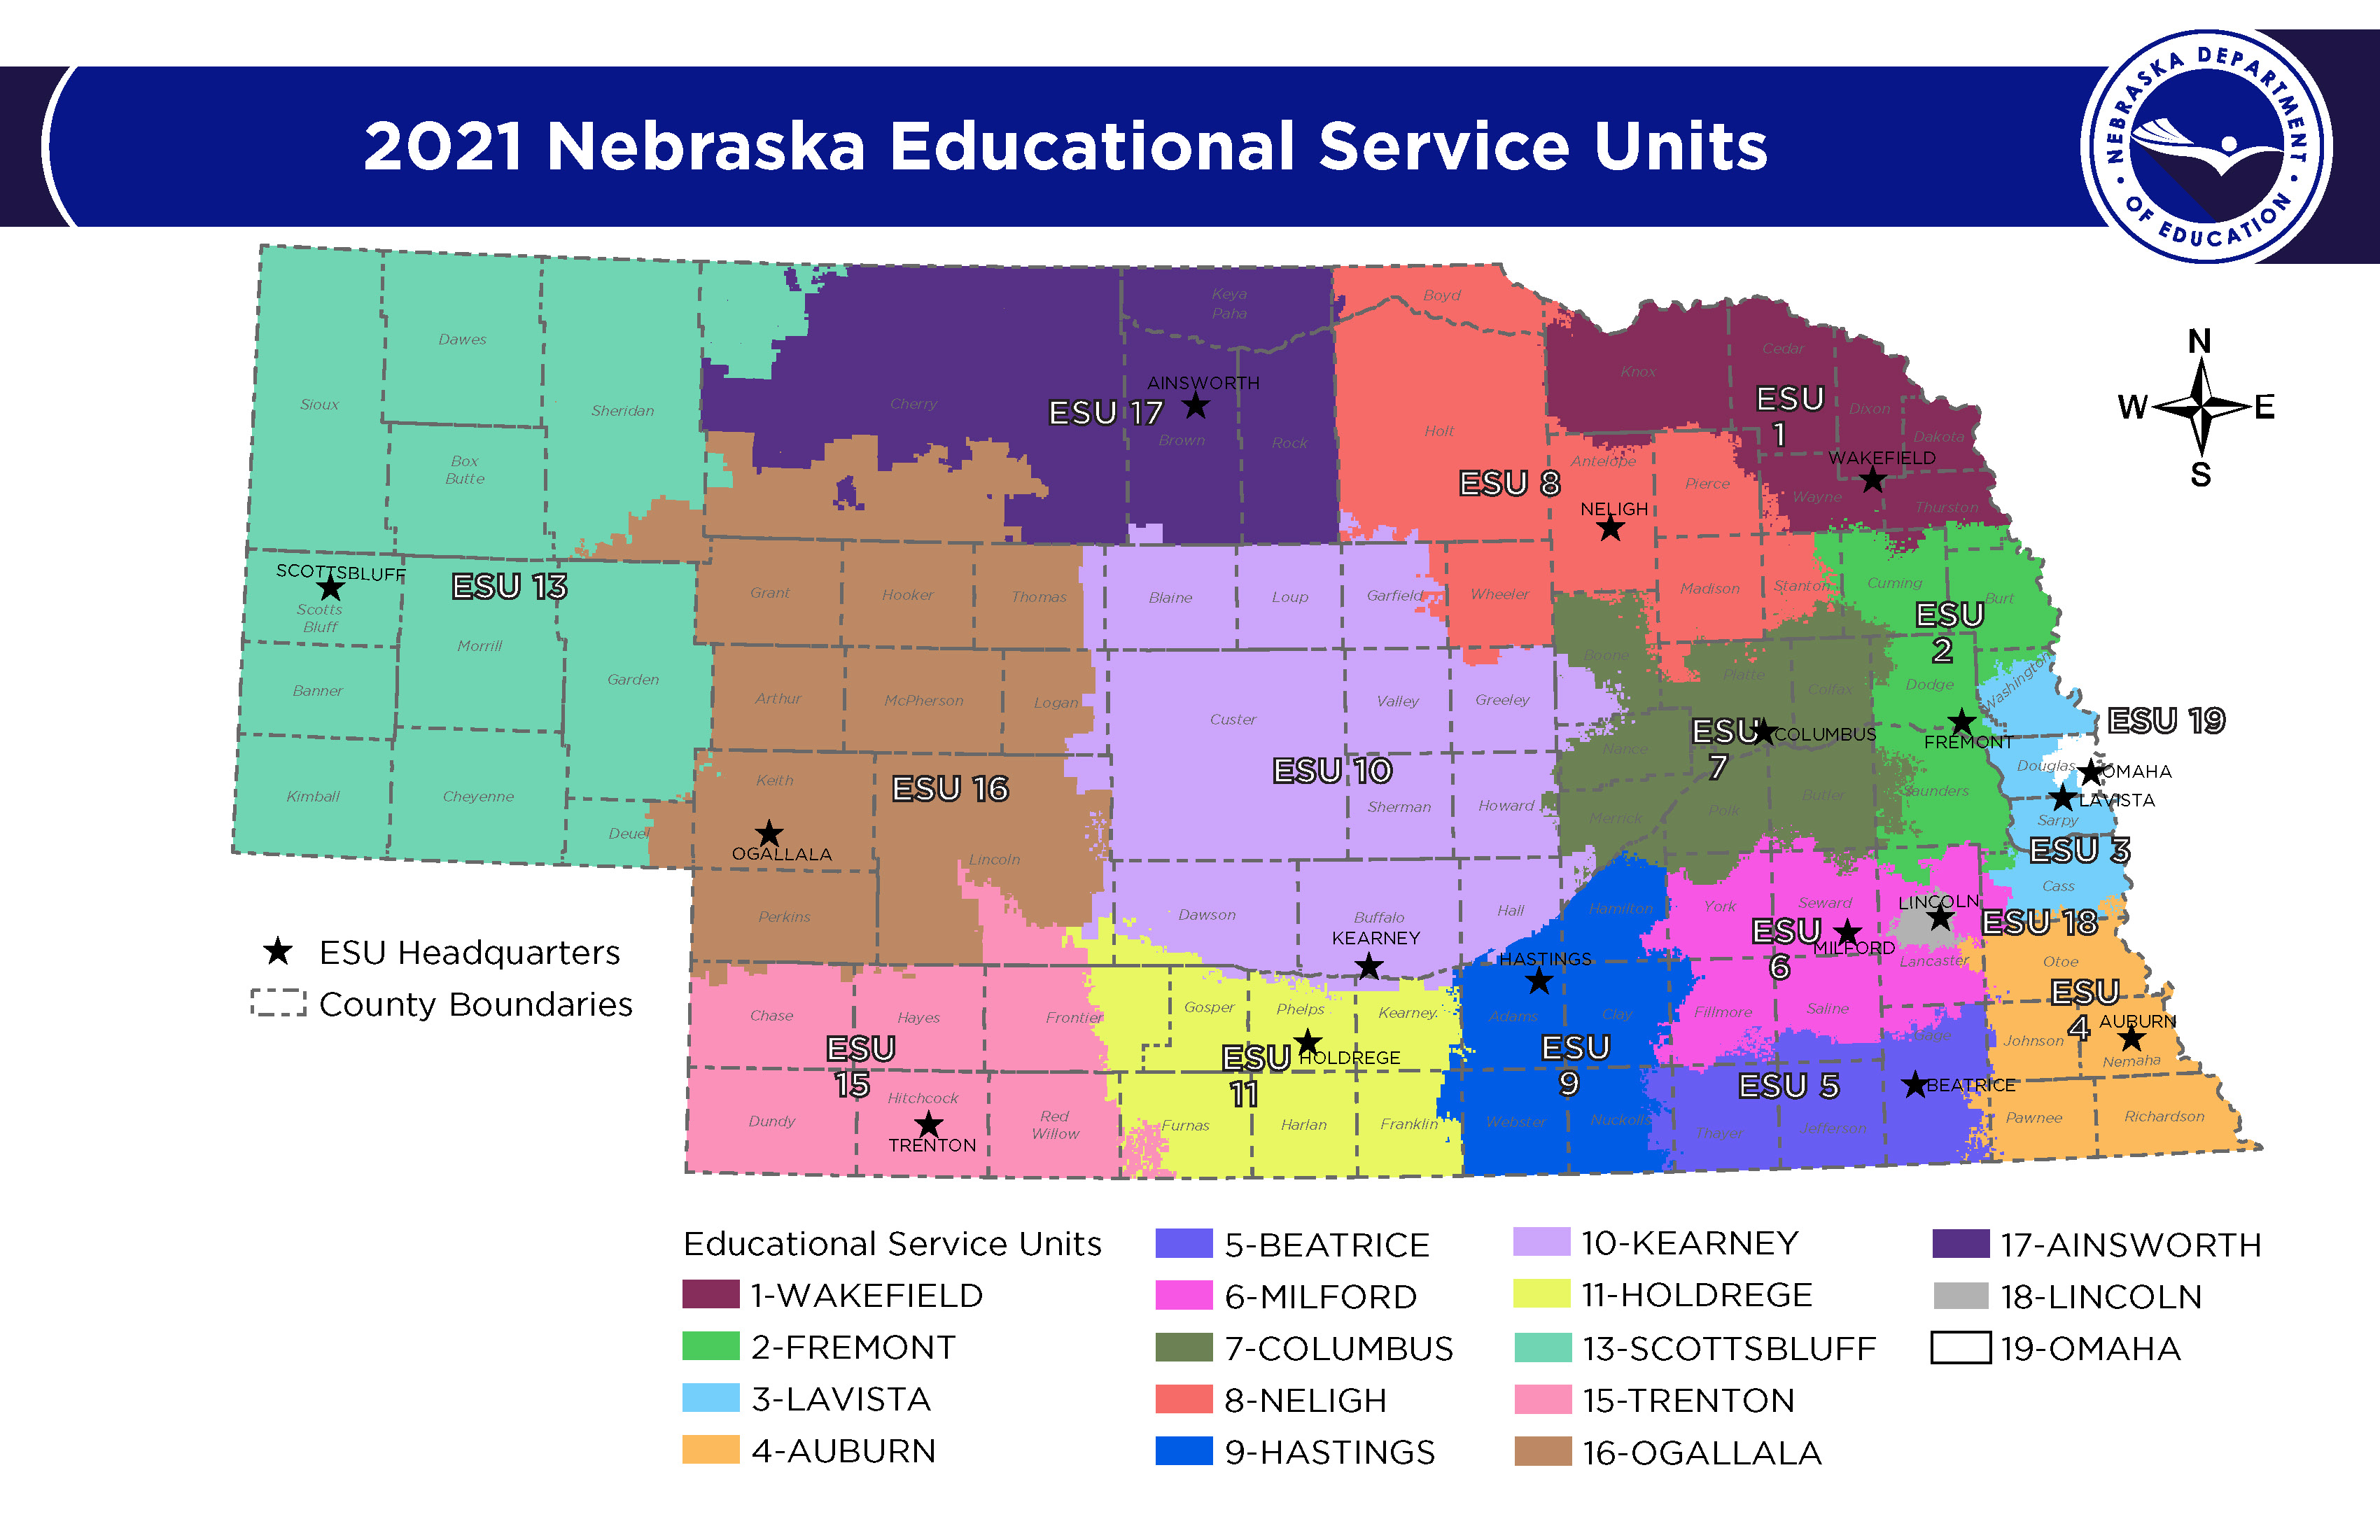 NEBRASKA EDUCATIONAL SERVICE UNITS MAP